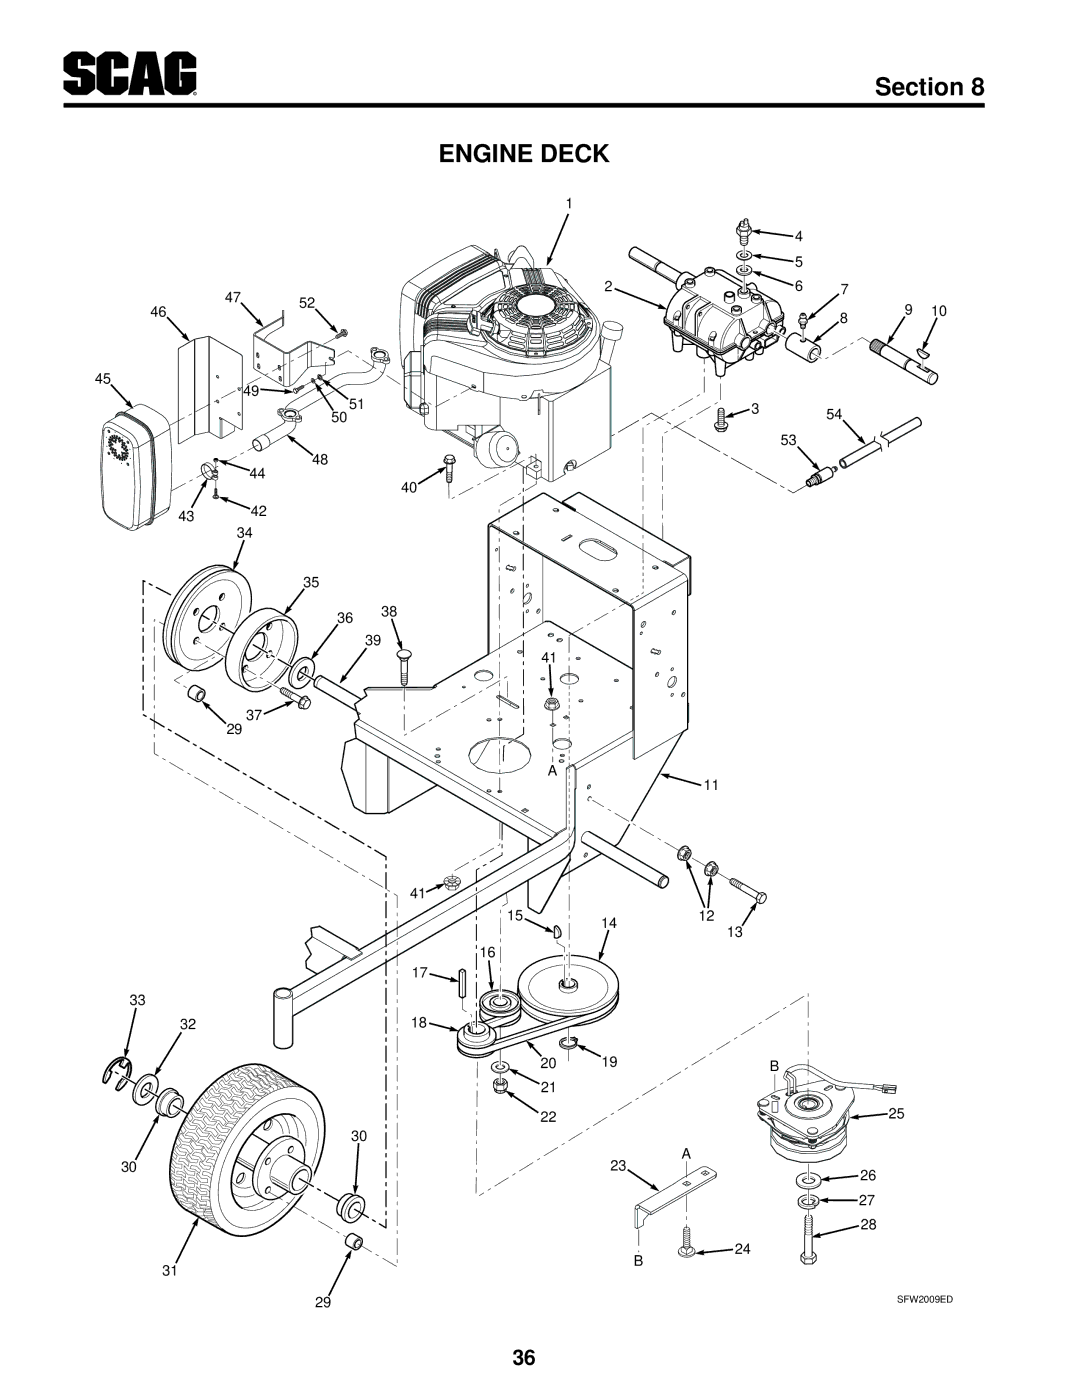 Scag Power Equipment SFW36-16BV manual Engine Deck 